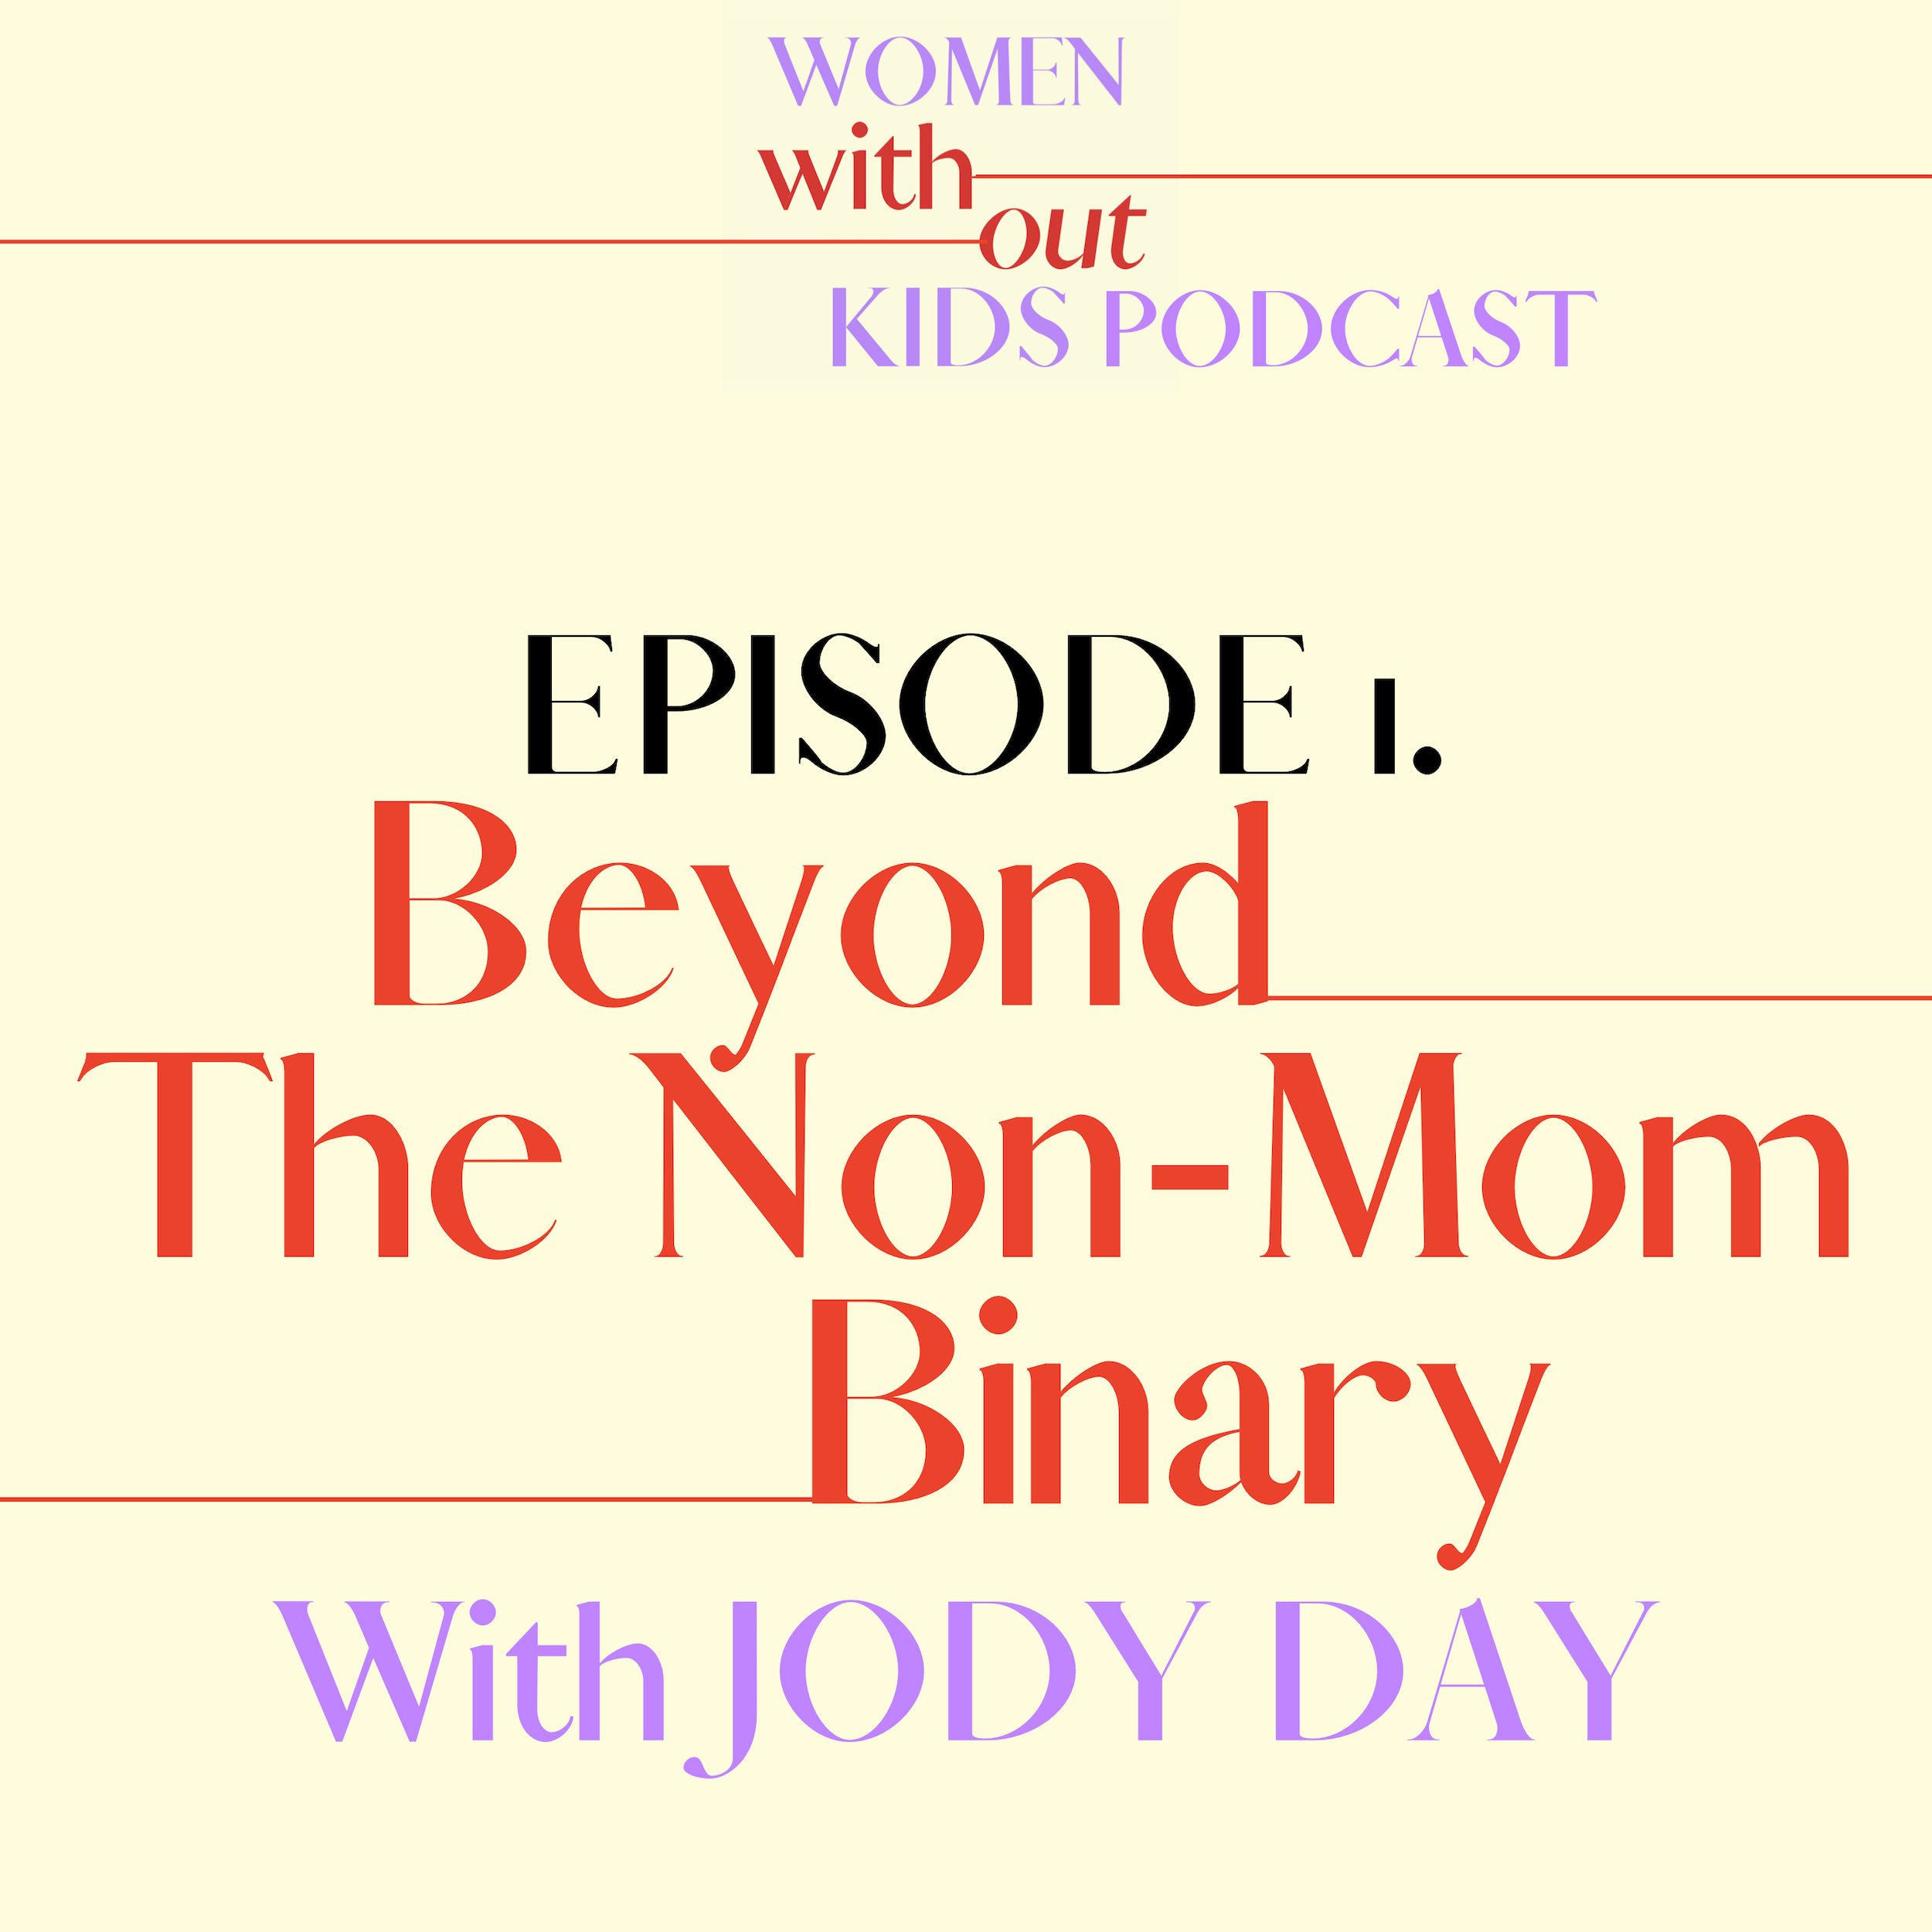 jody day women without kids podcast ruby warrington pronatalism